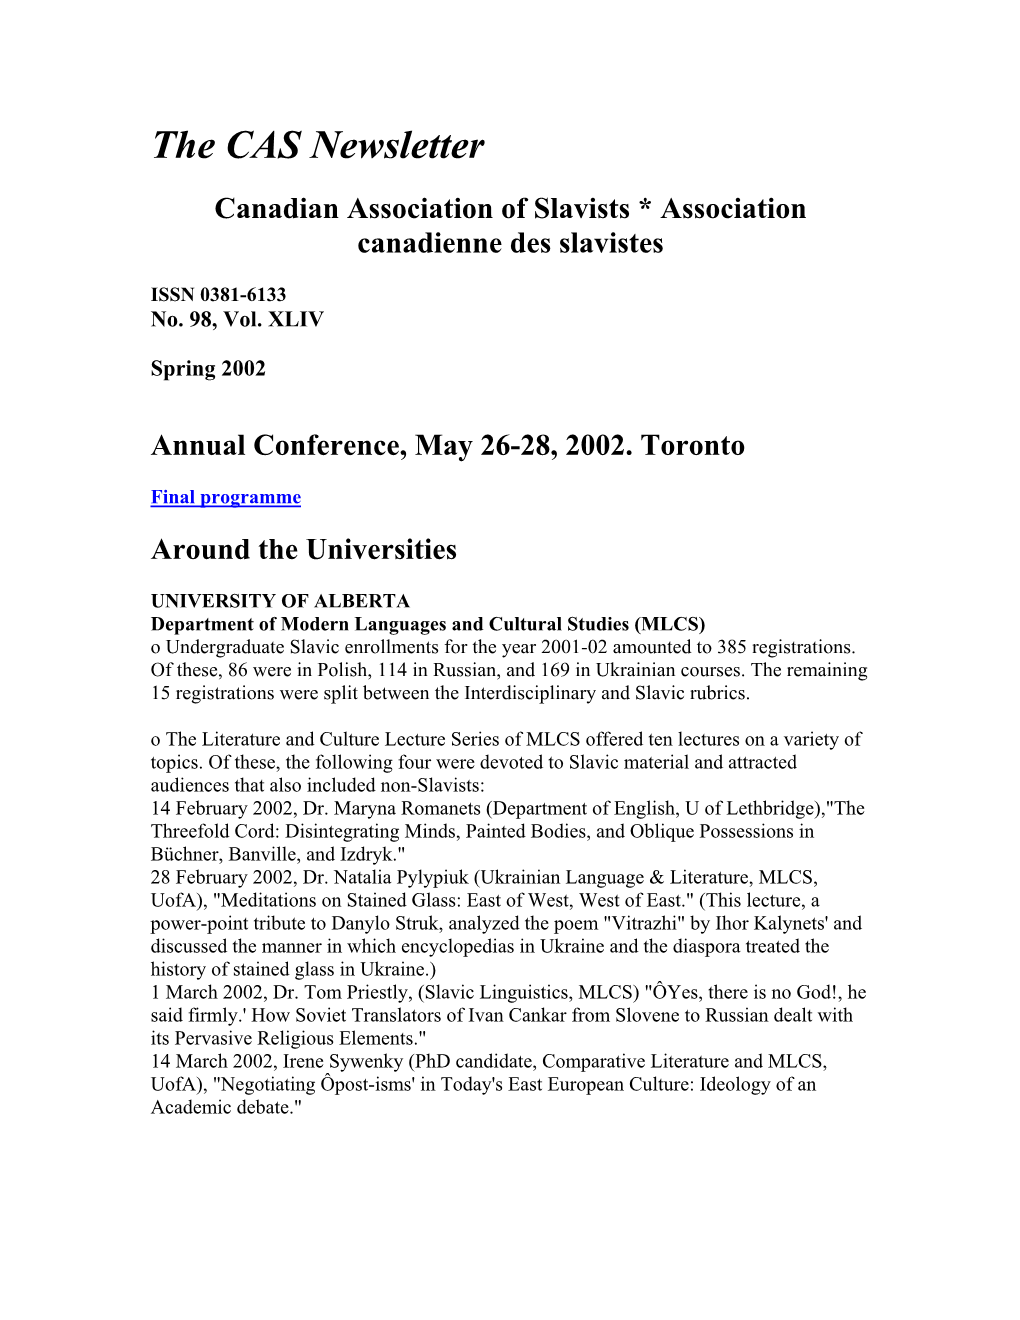 The CAS Newsletter Canadian Association of Slavists * Association Canadienne Des Slavistes